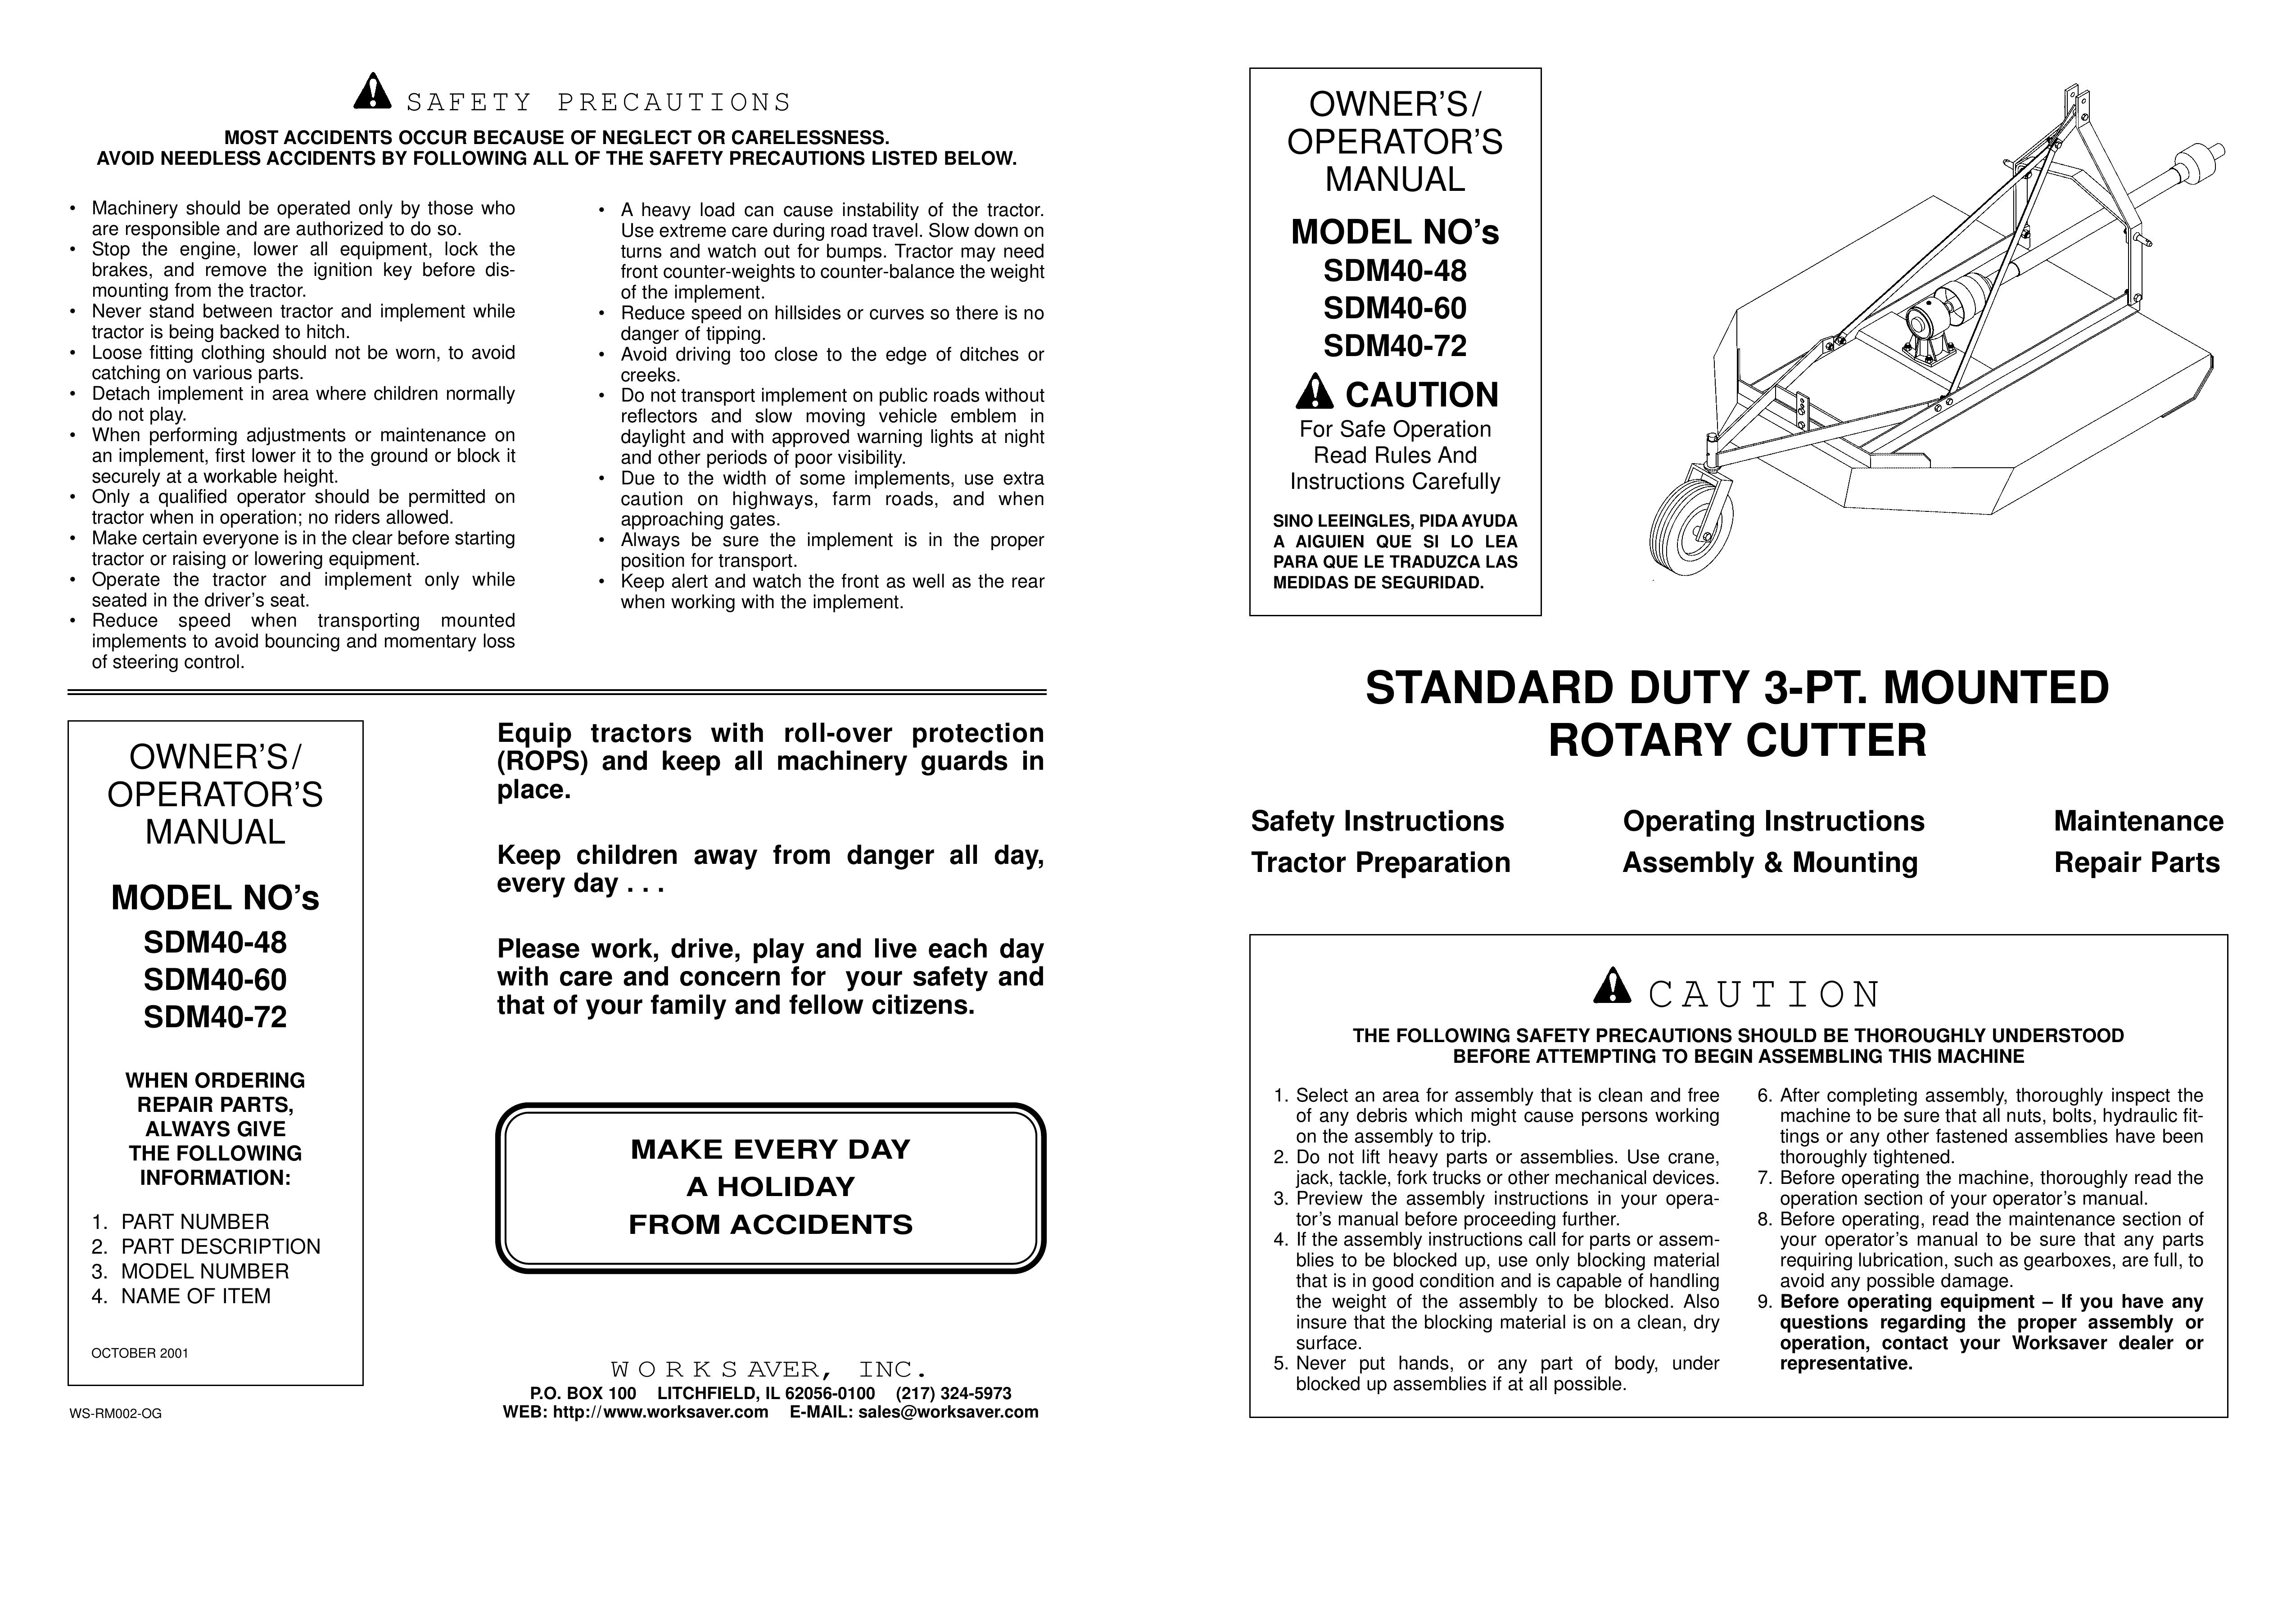 Worksaver SDM40-72 Brush Cutter User Manual